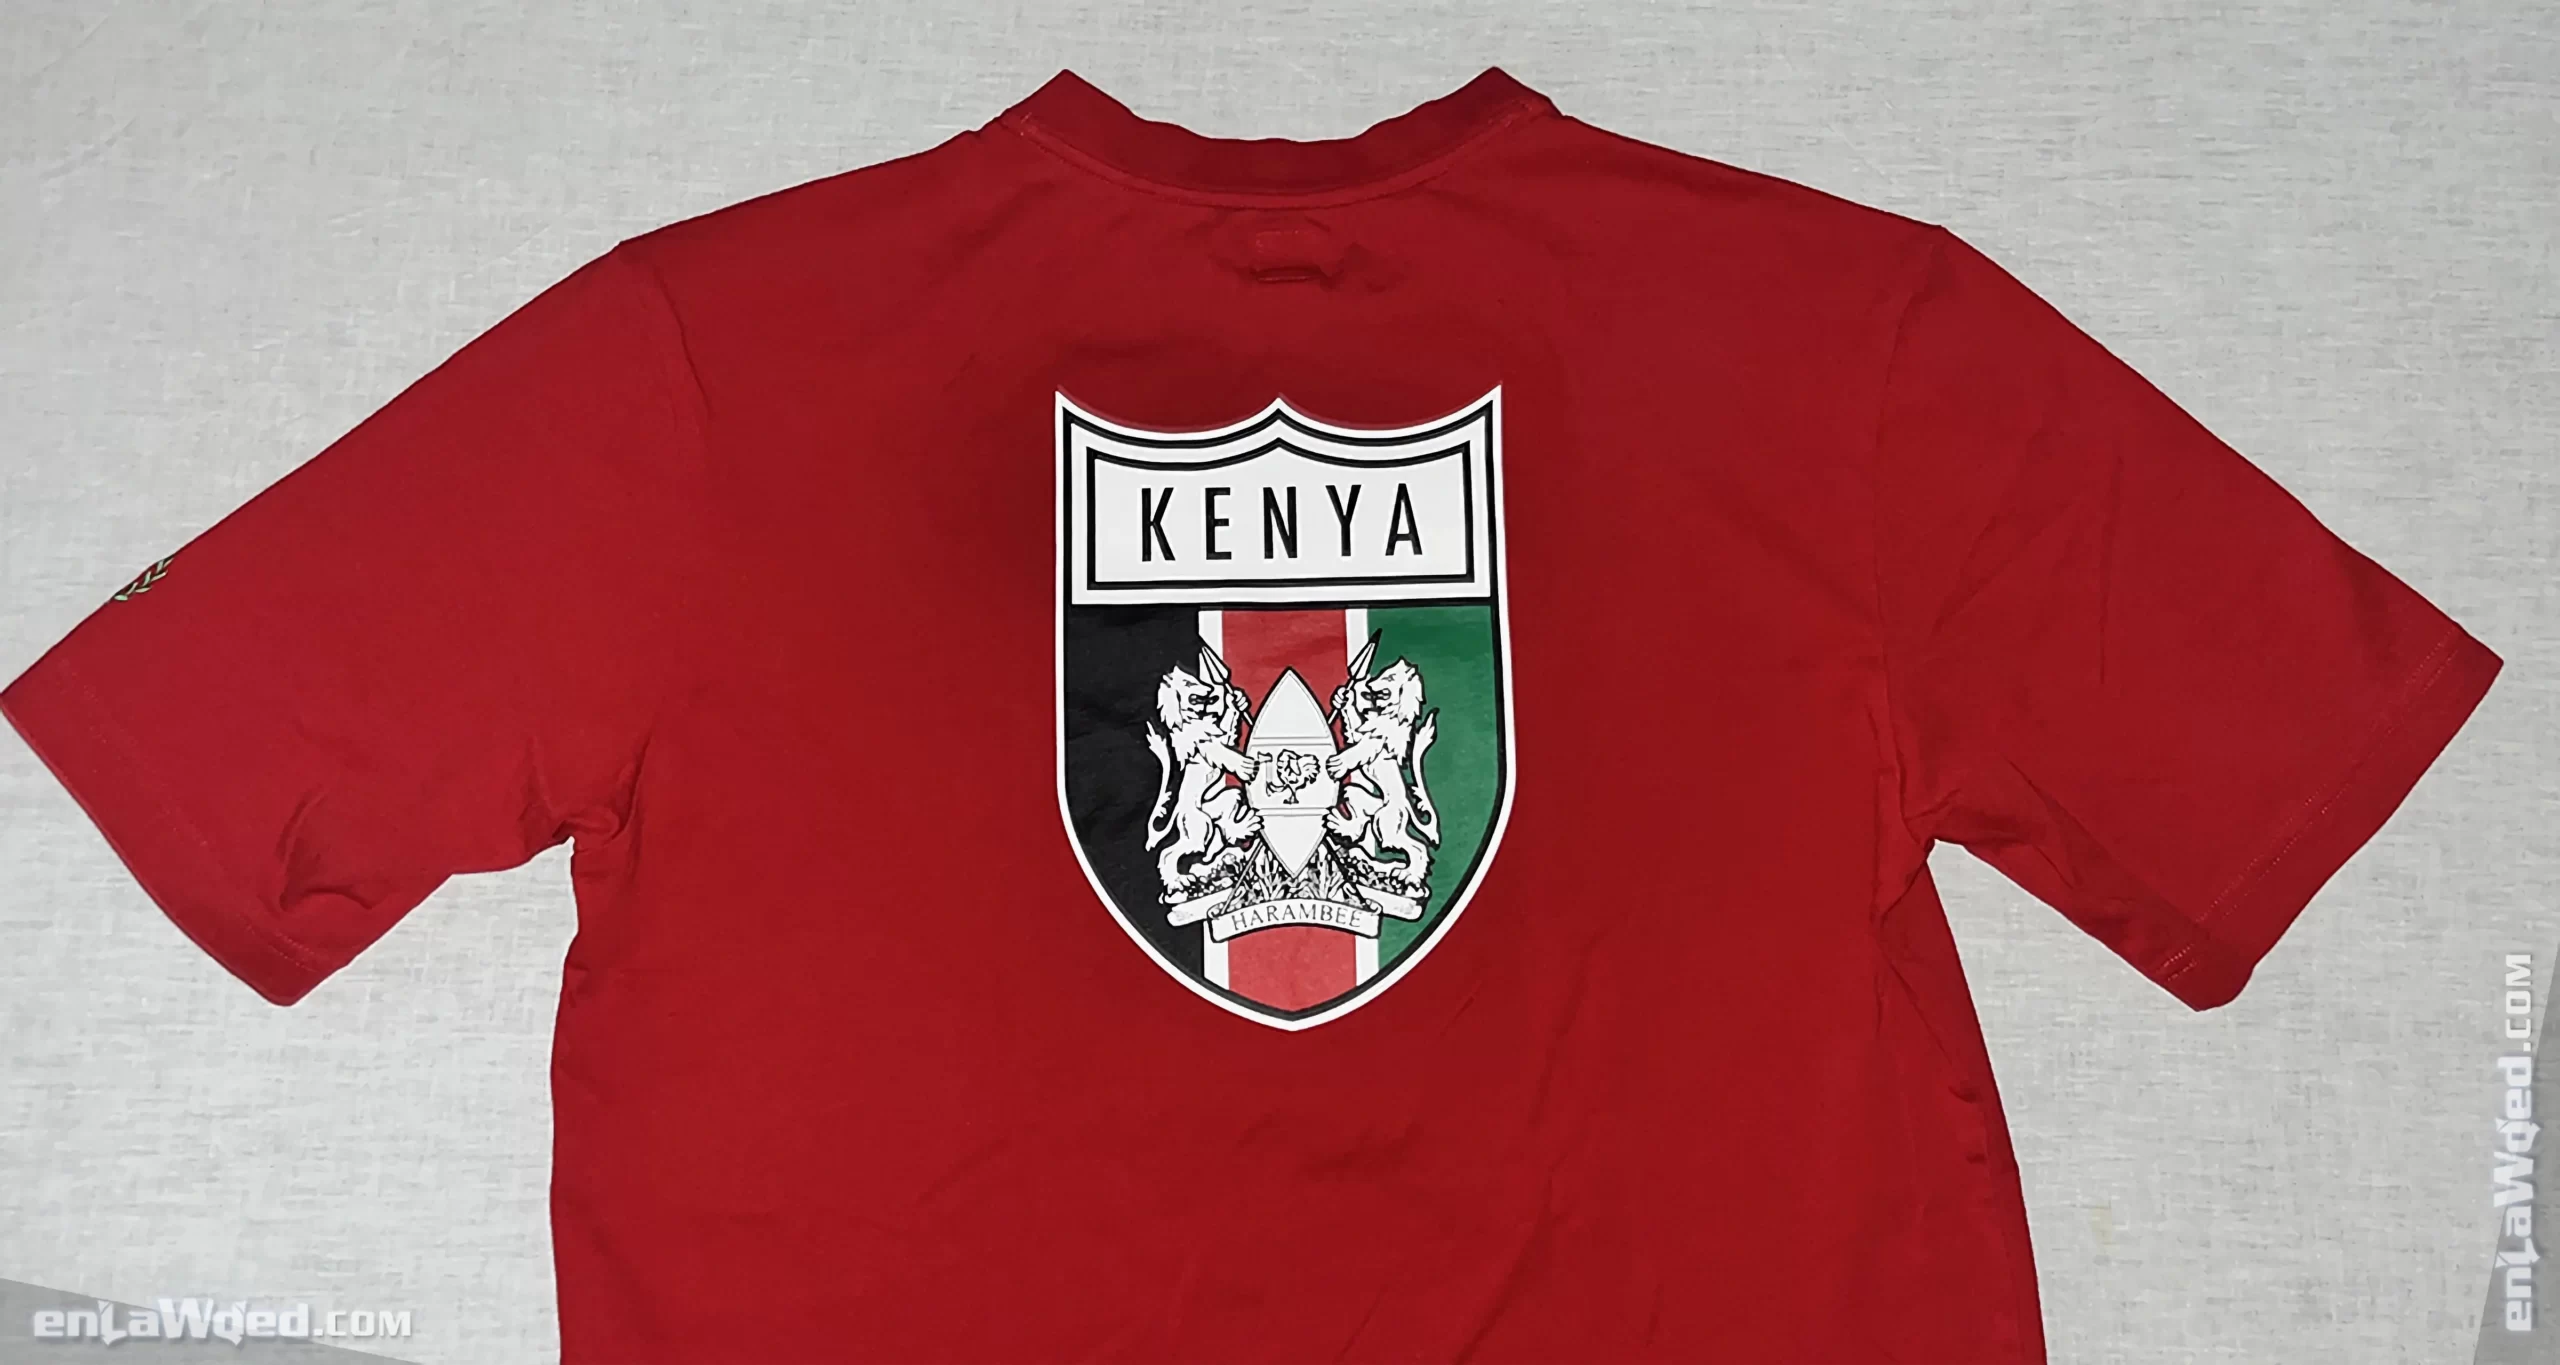 Men’s 2007 Kenya Harambee T-Shirt by Adidas Originals: Overnight (EnLawded.com file #lp1nb8qa126192hdslbkt8e7n)